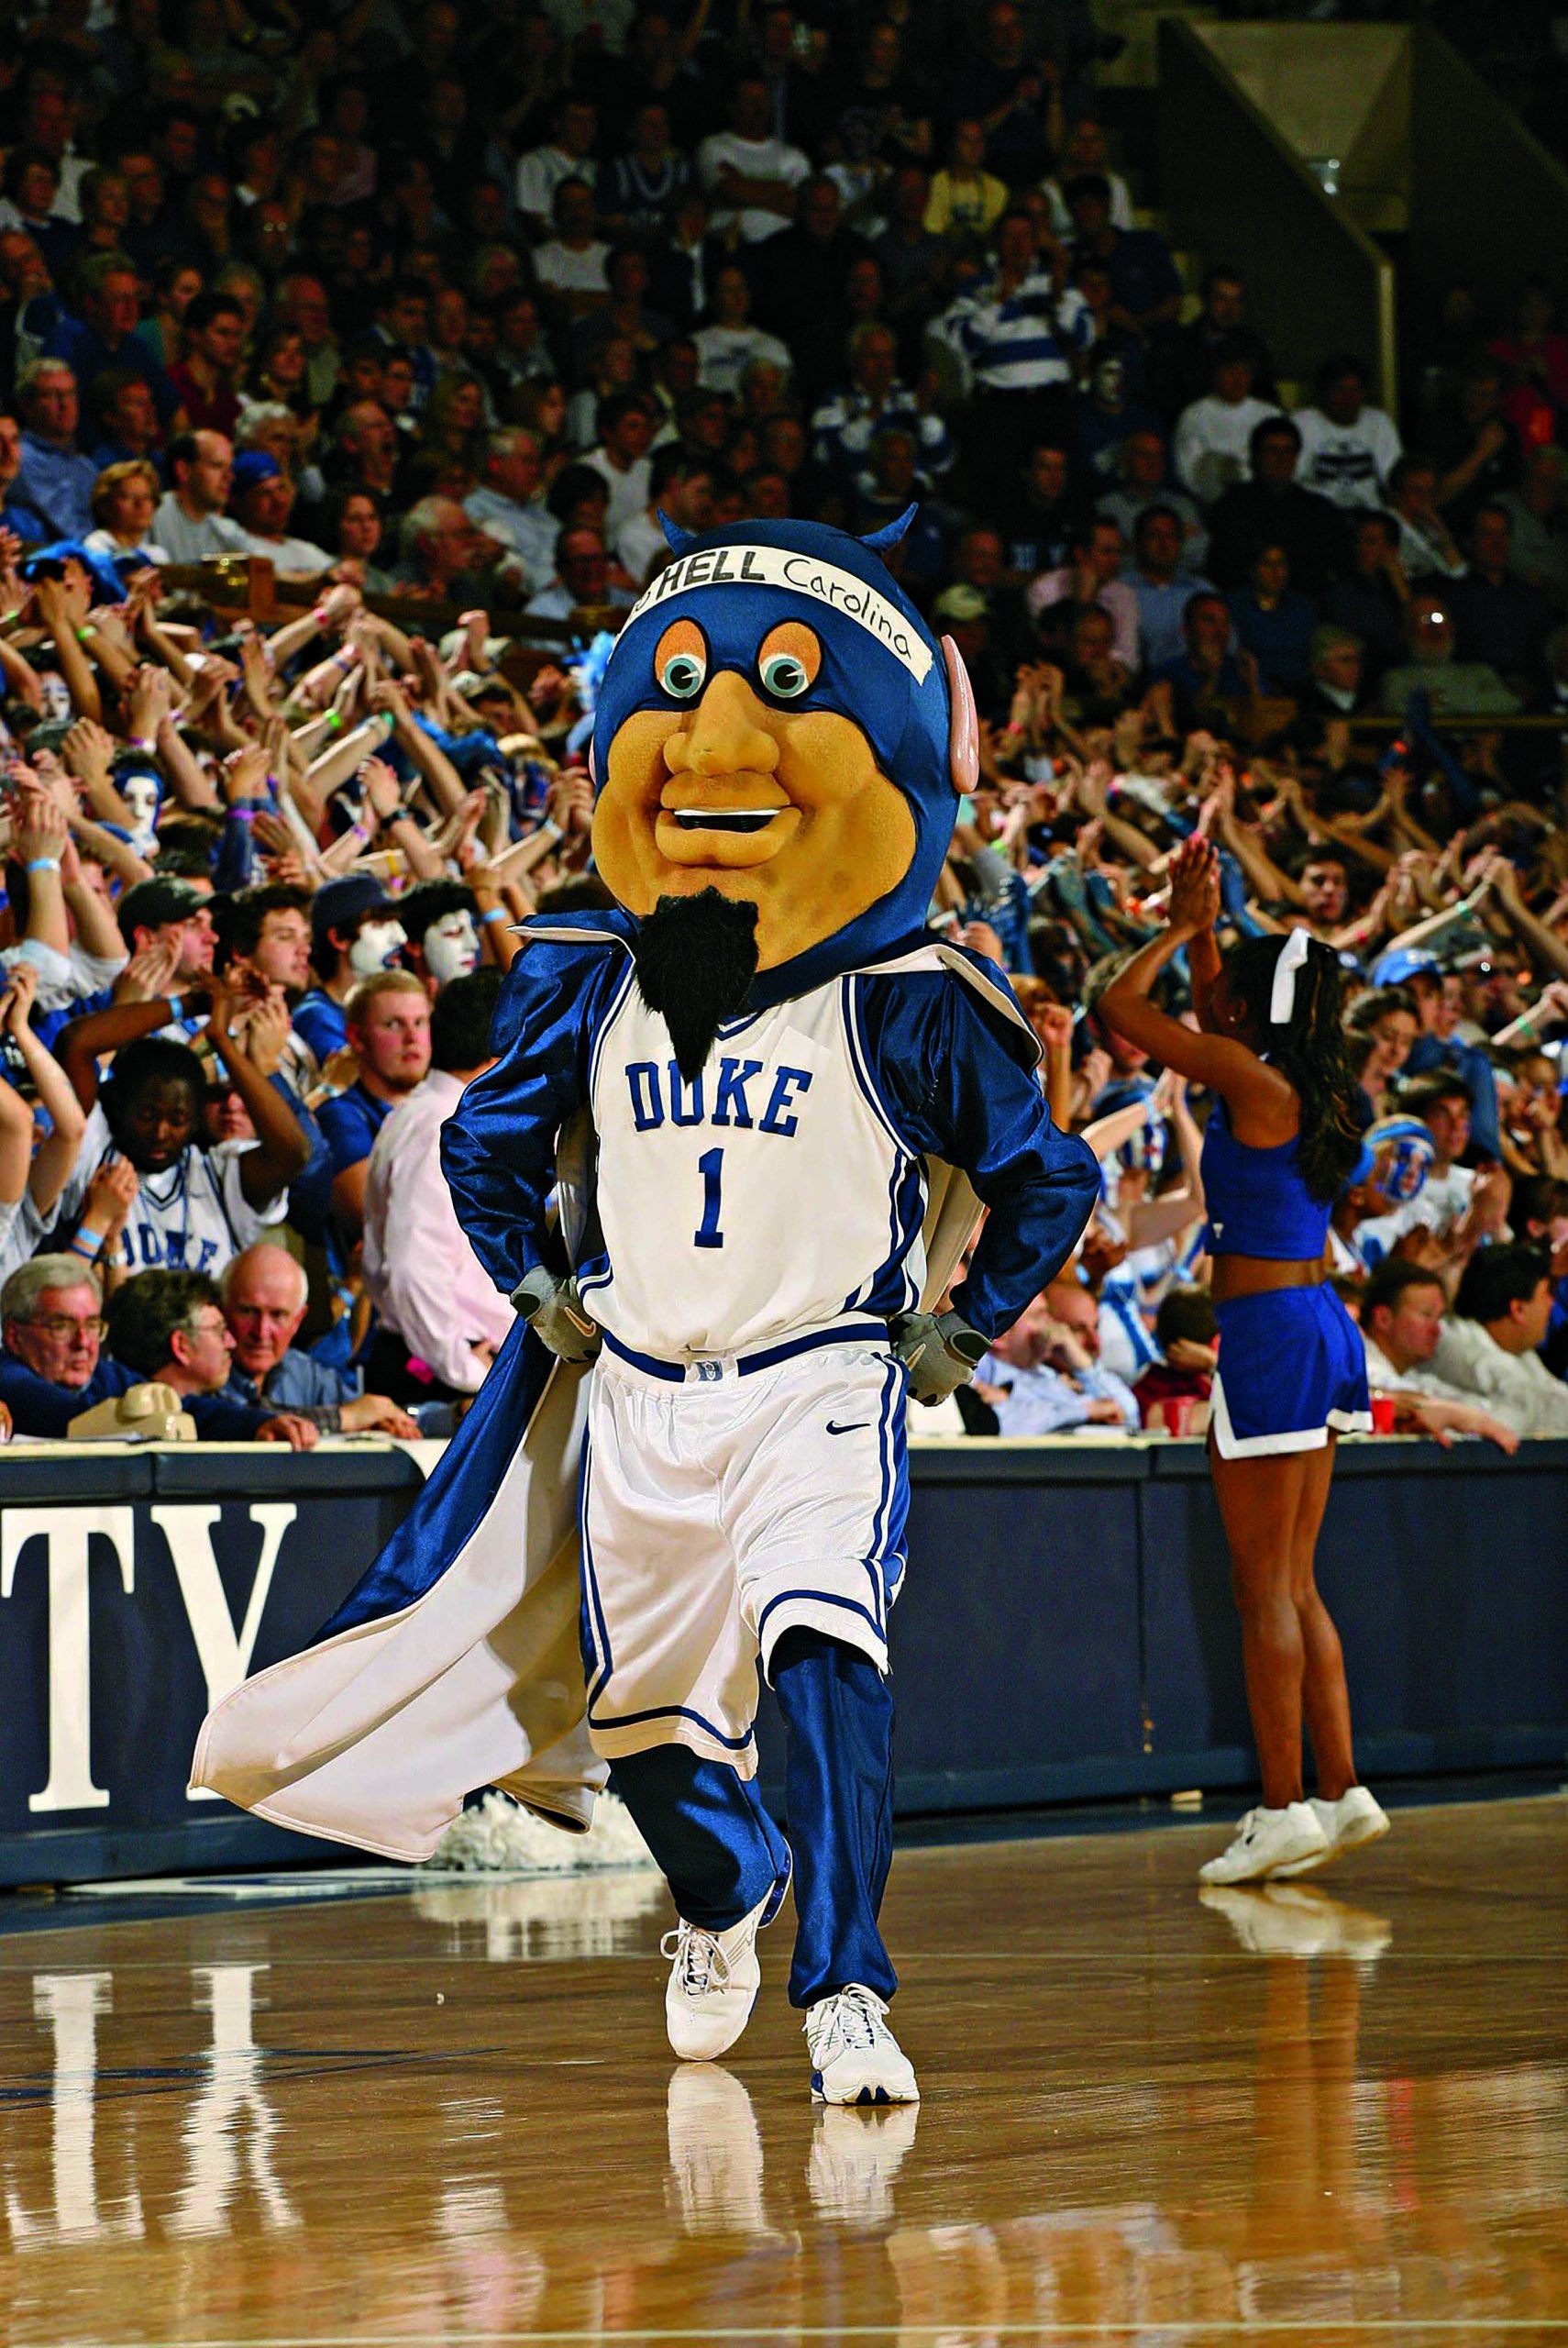 The True Story Behind the Iconic Duke Blue Devil Mascot